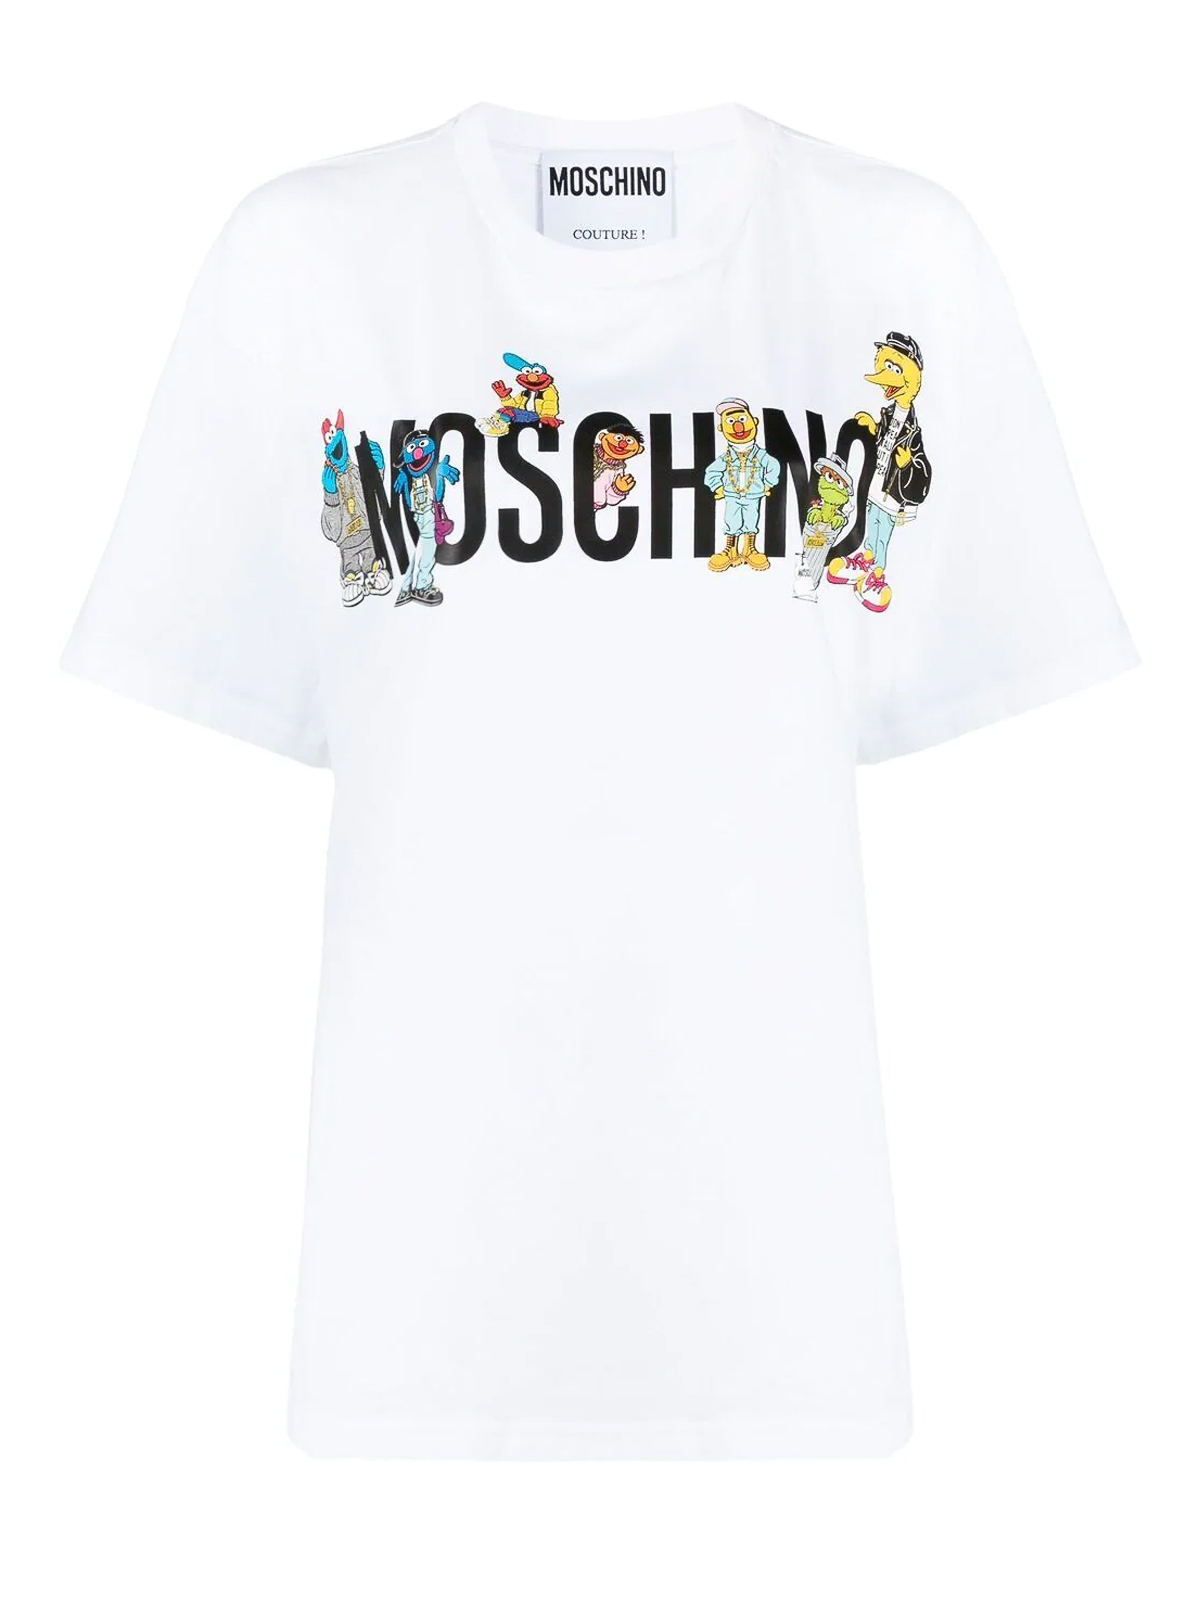 Oxideren Verstrikking conservatief T-shirts Moschino - Logo printed T-shirt - 077860401001 | iKRIX.com